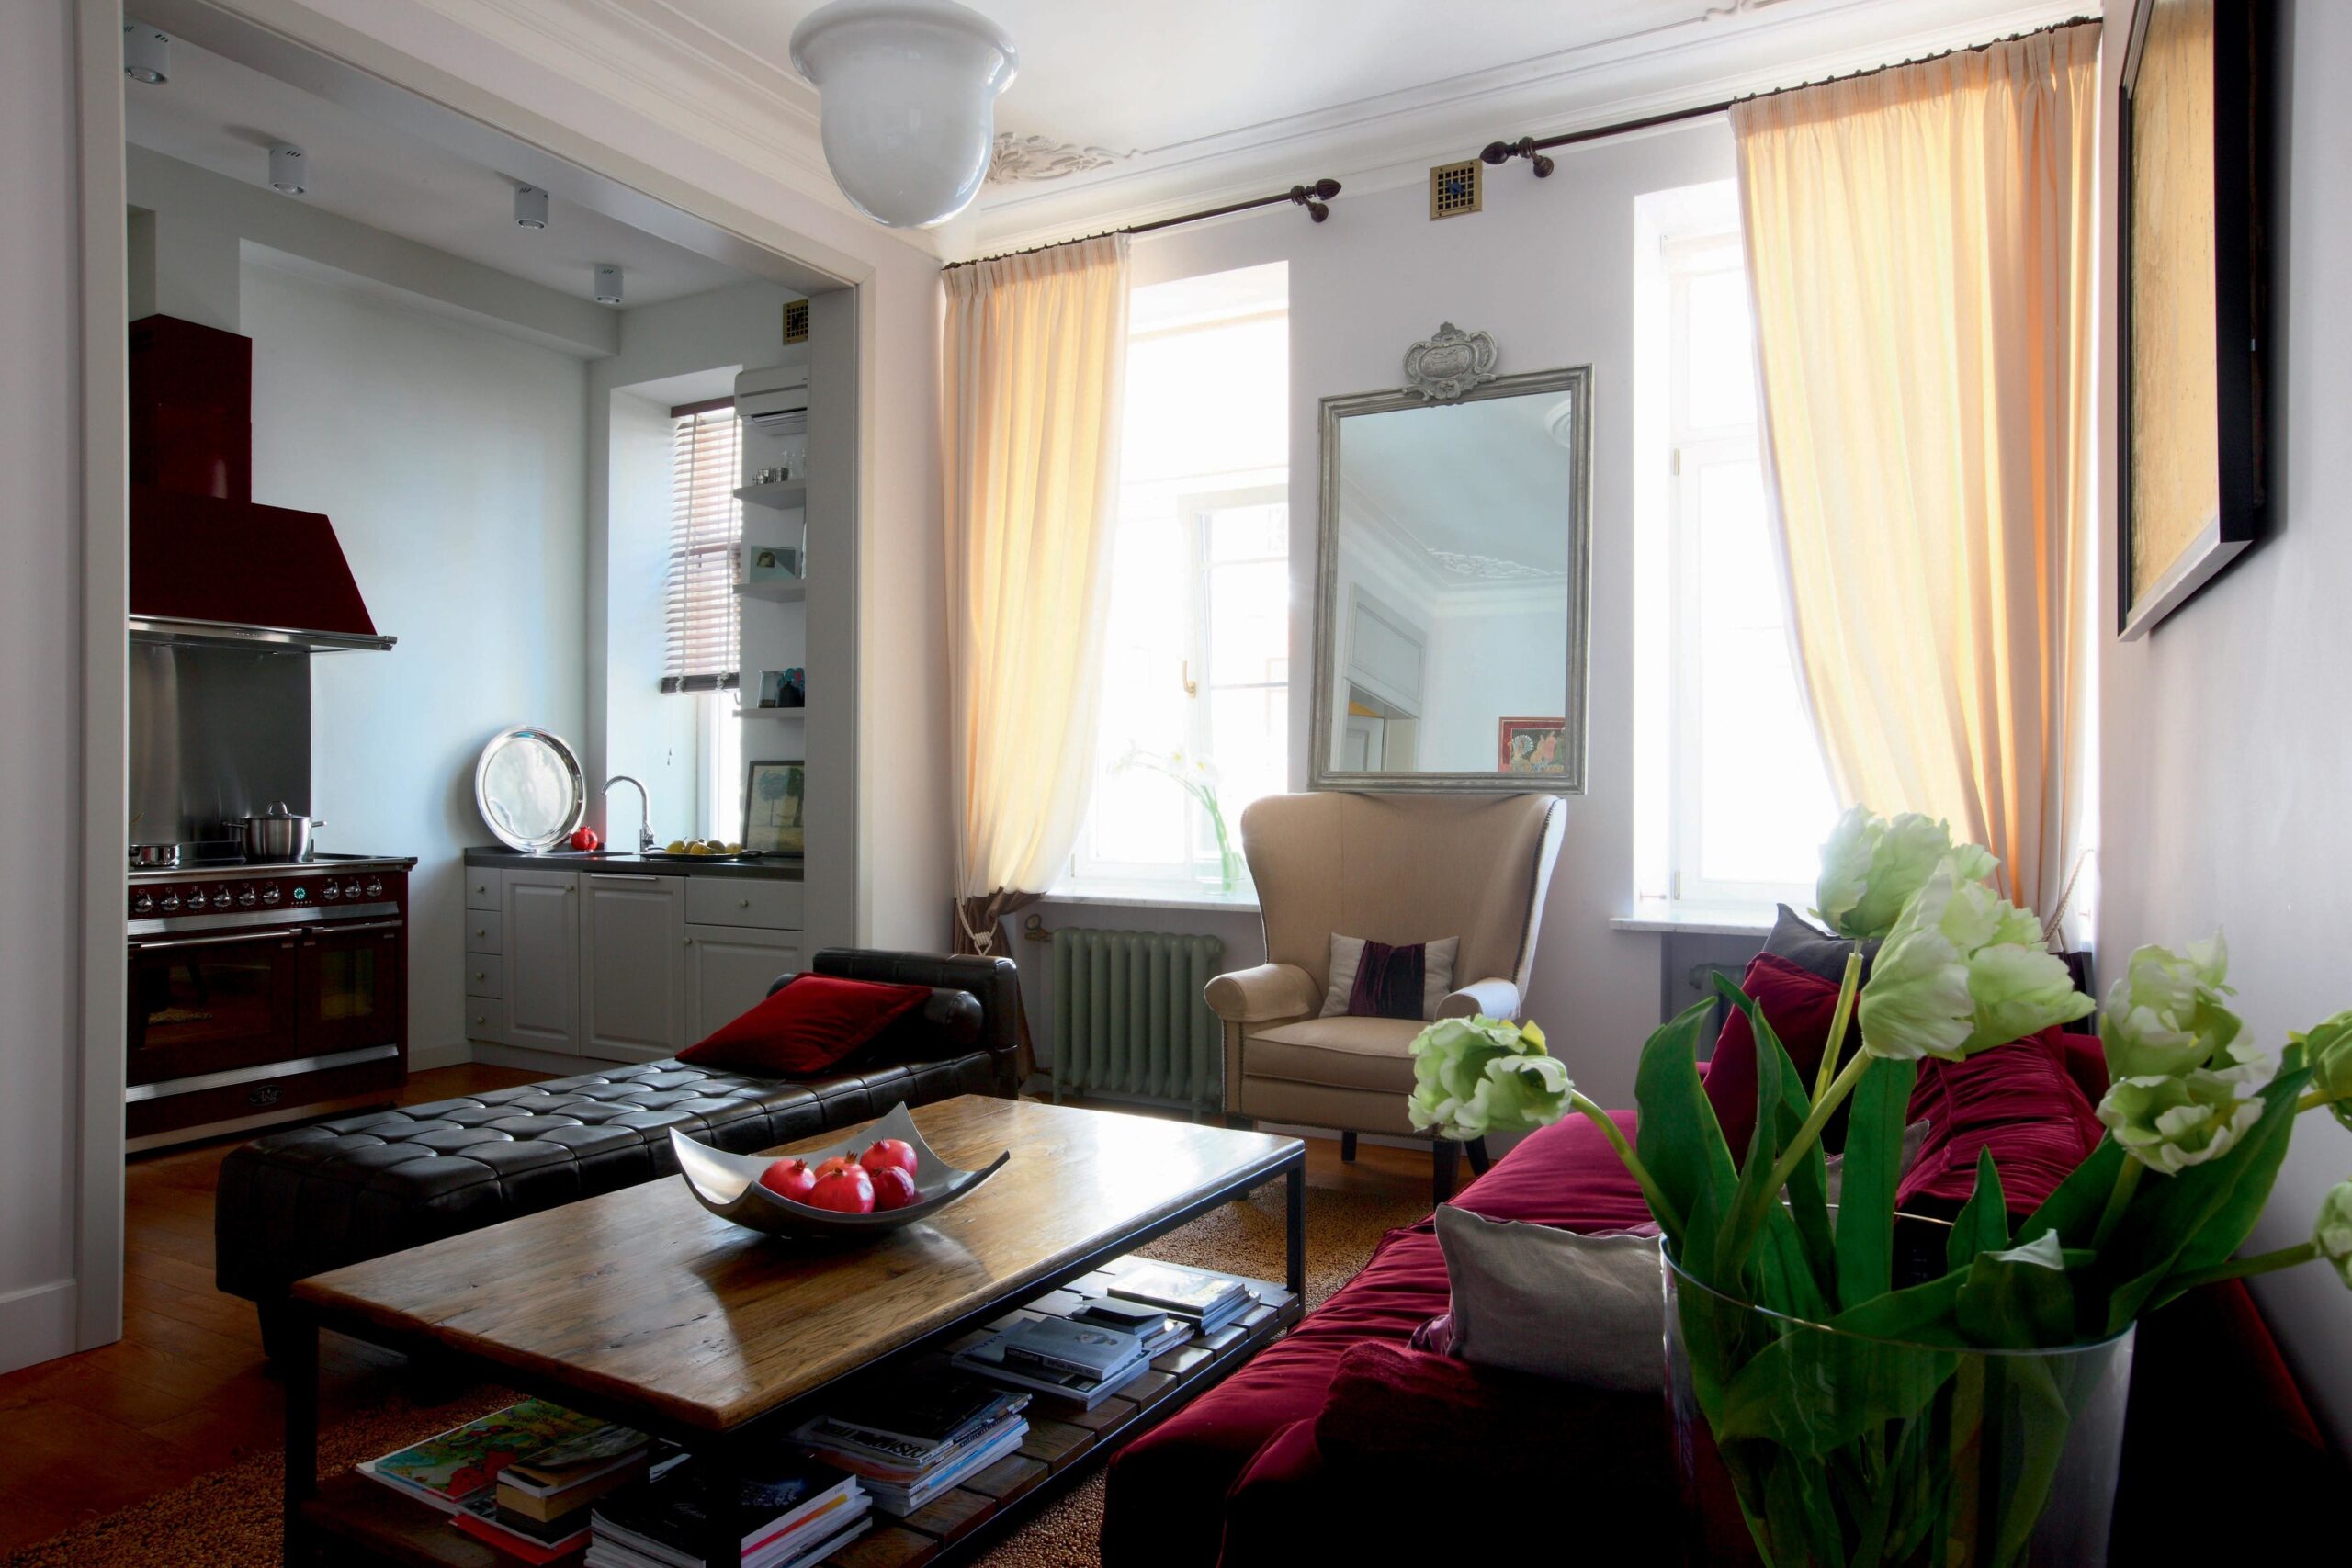 Квартира Софико Шеварднадзе в лучшем городе на планете